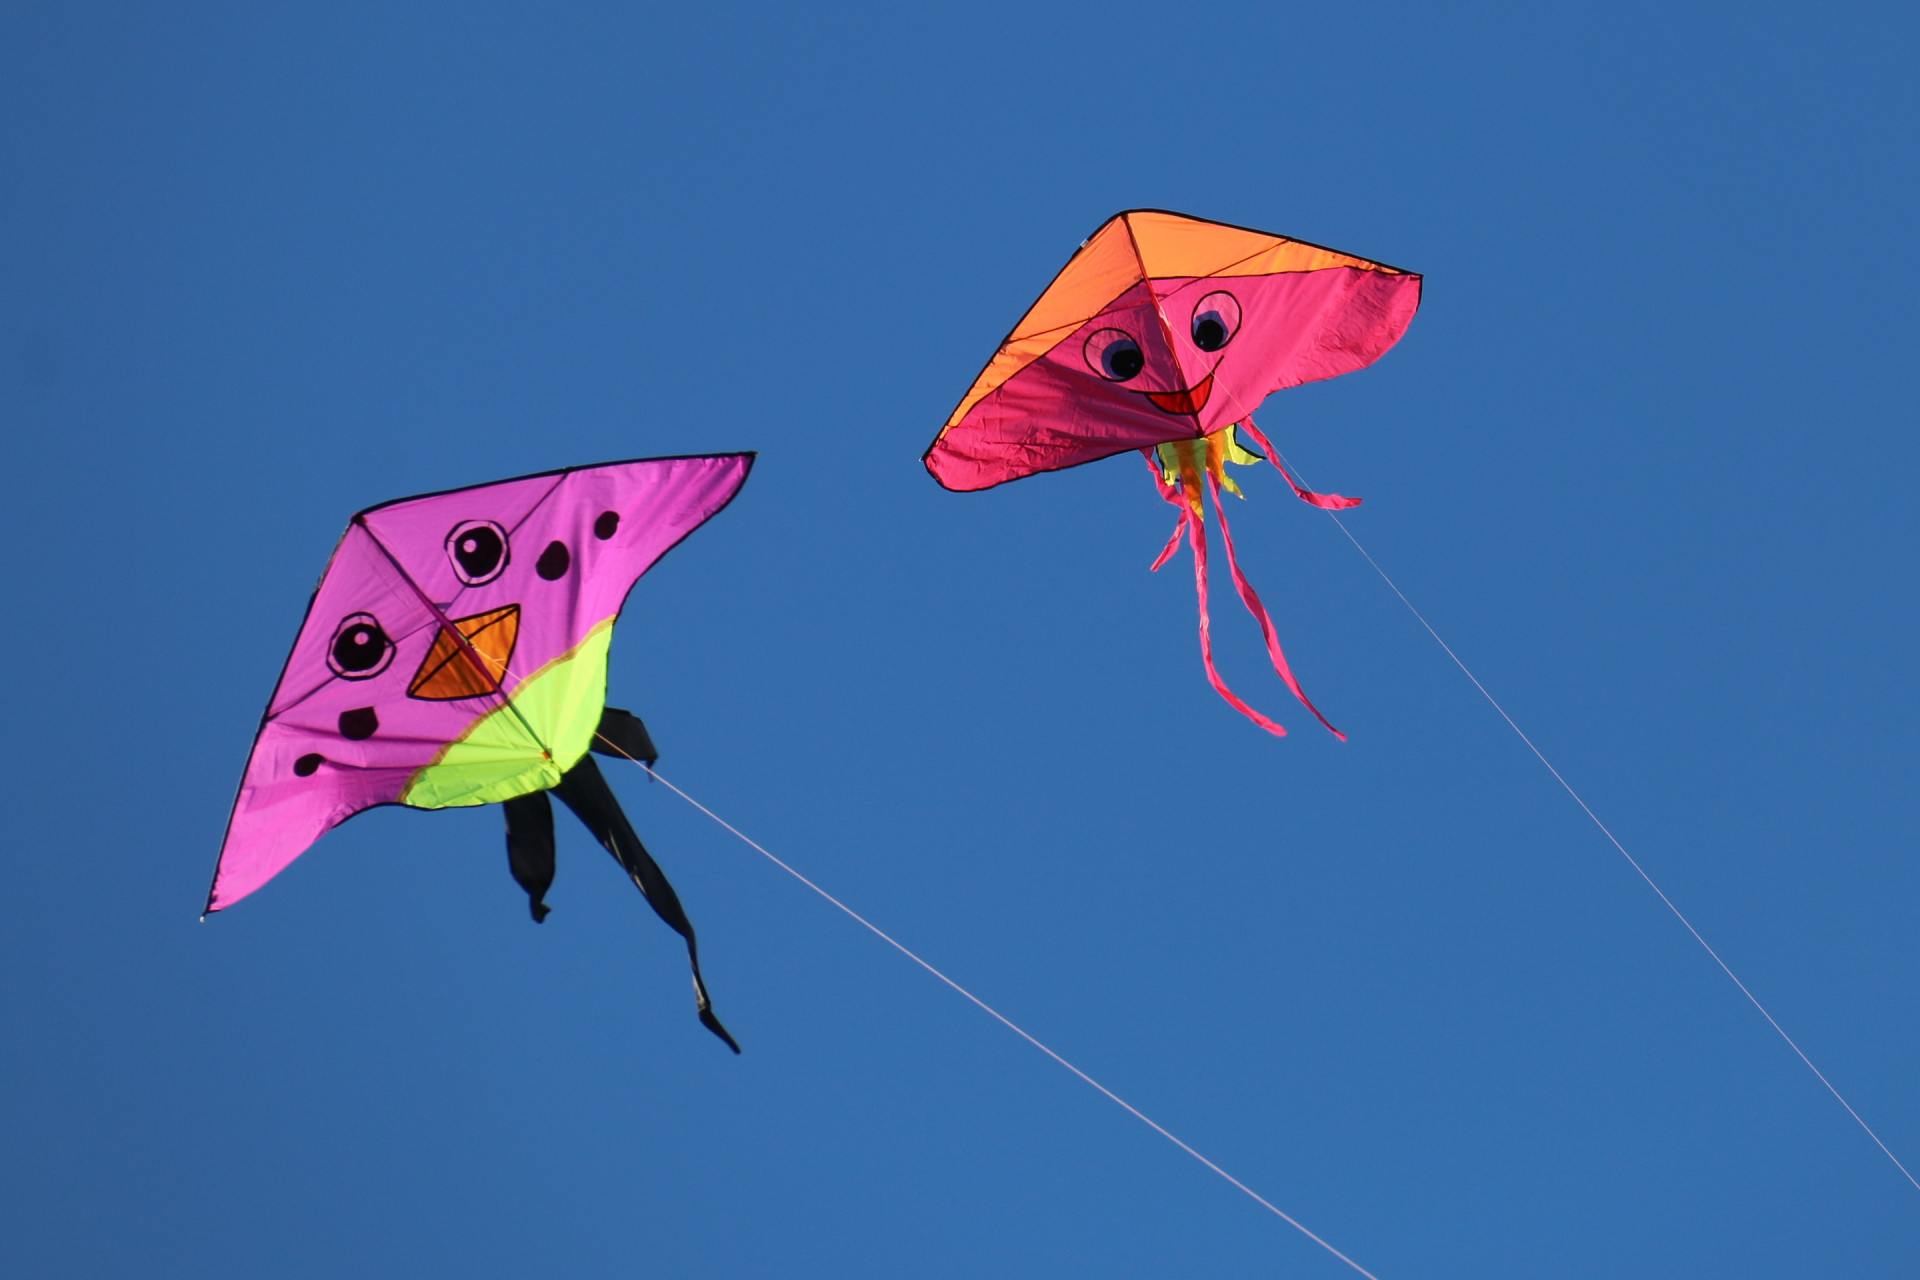 Flying a stunt kite at Westward Ho! beach in devon